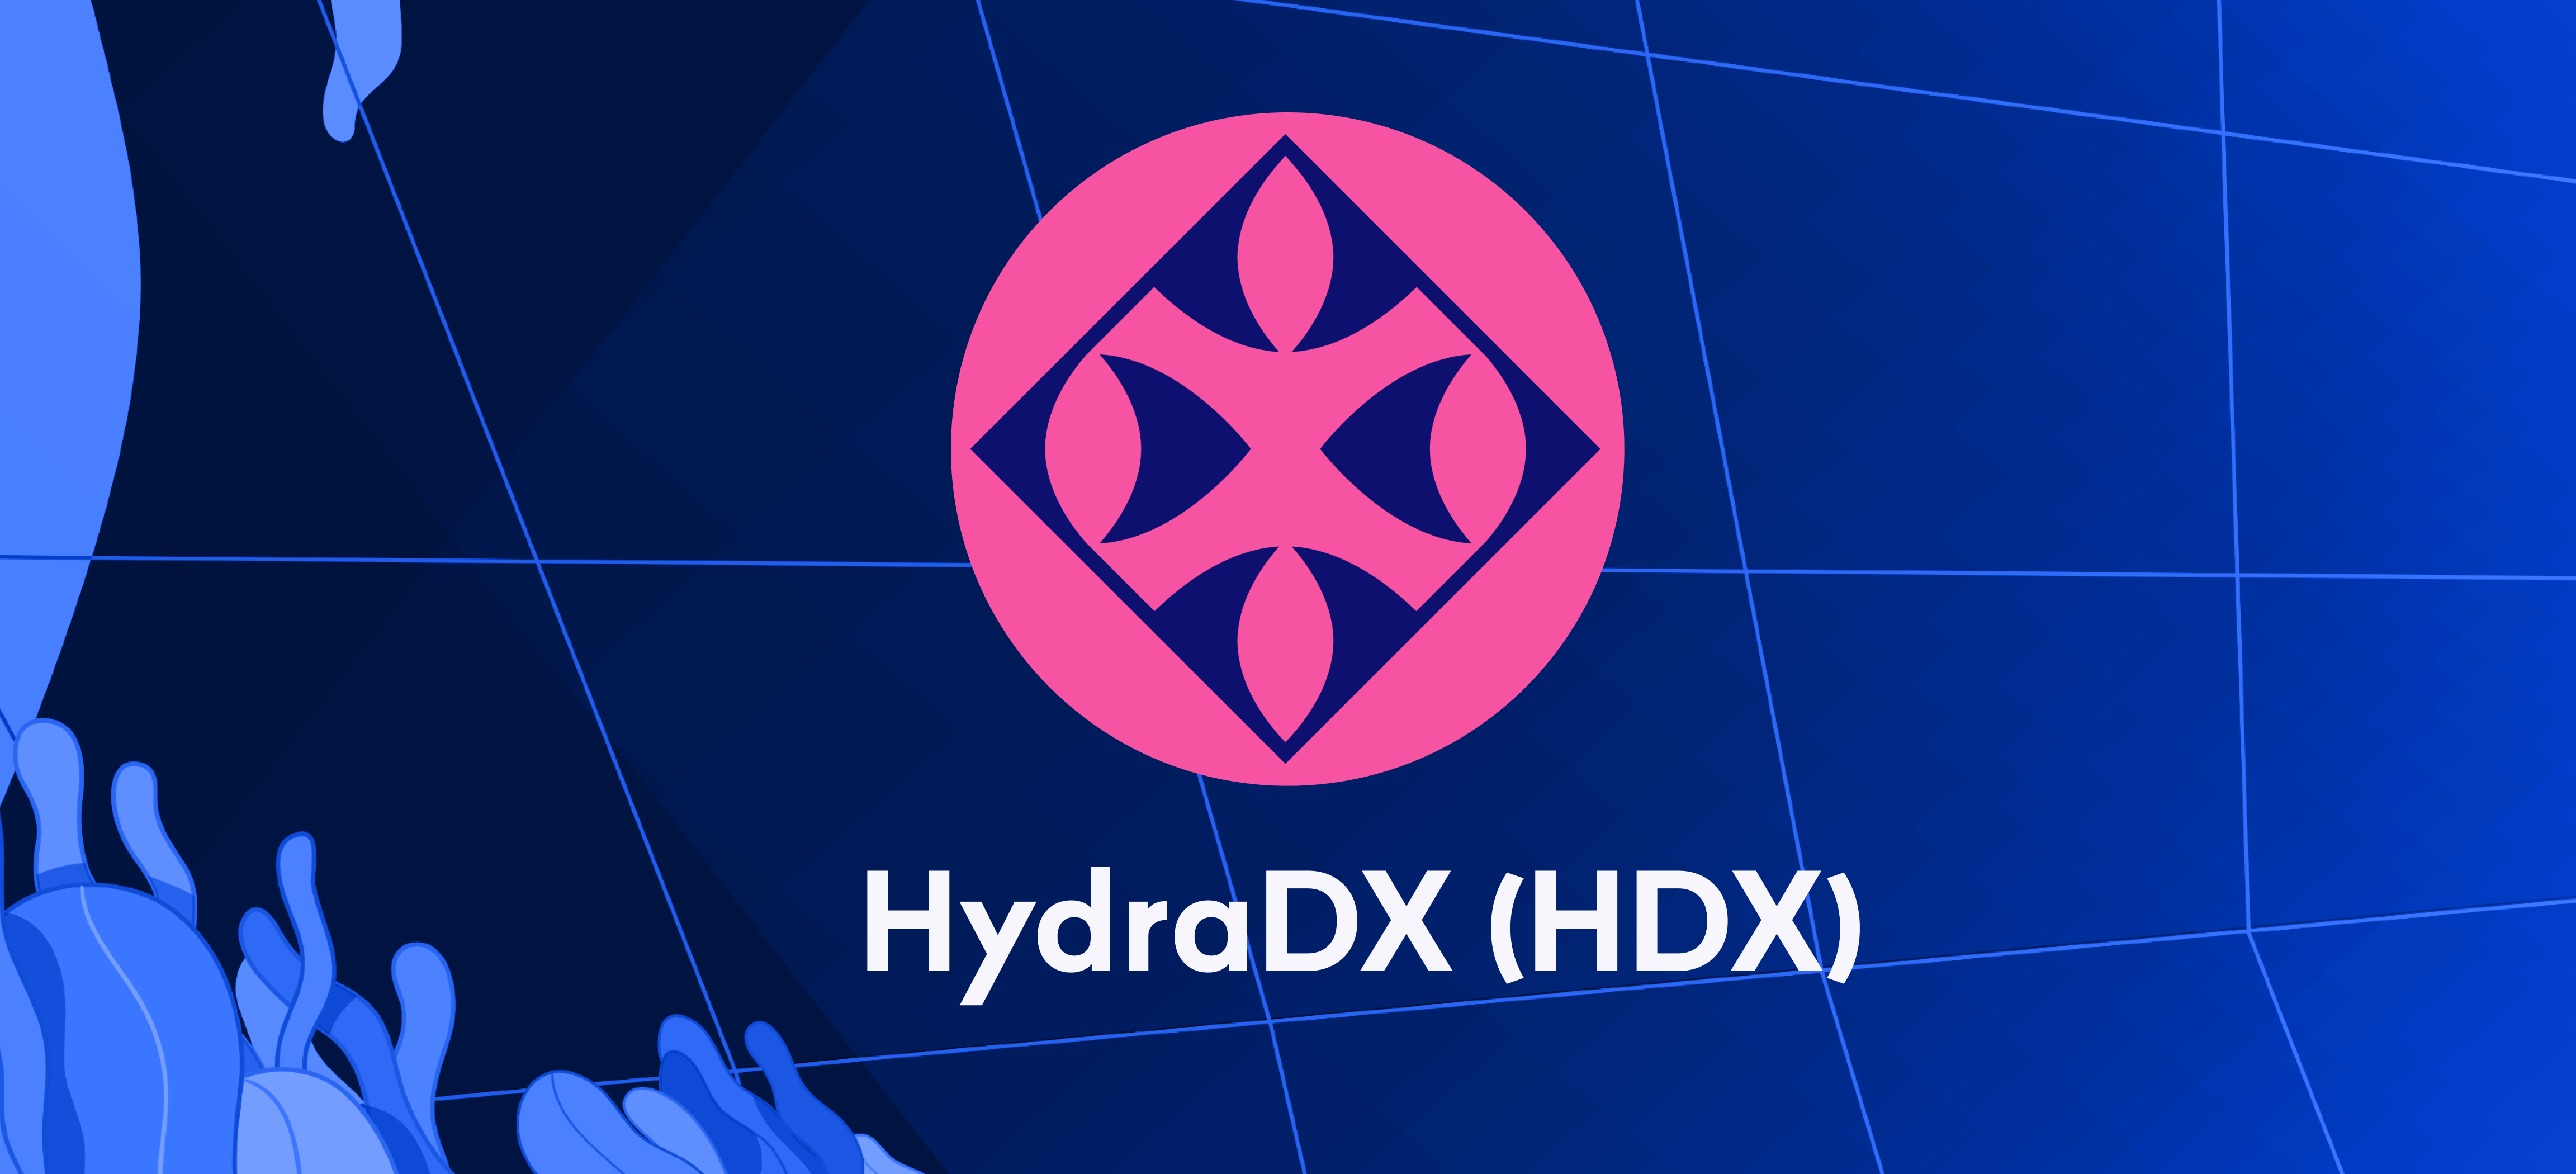 Handel med HydraDX (HDX) starter 24. januar – innskudd nå!